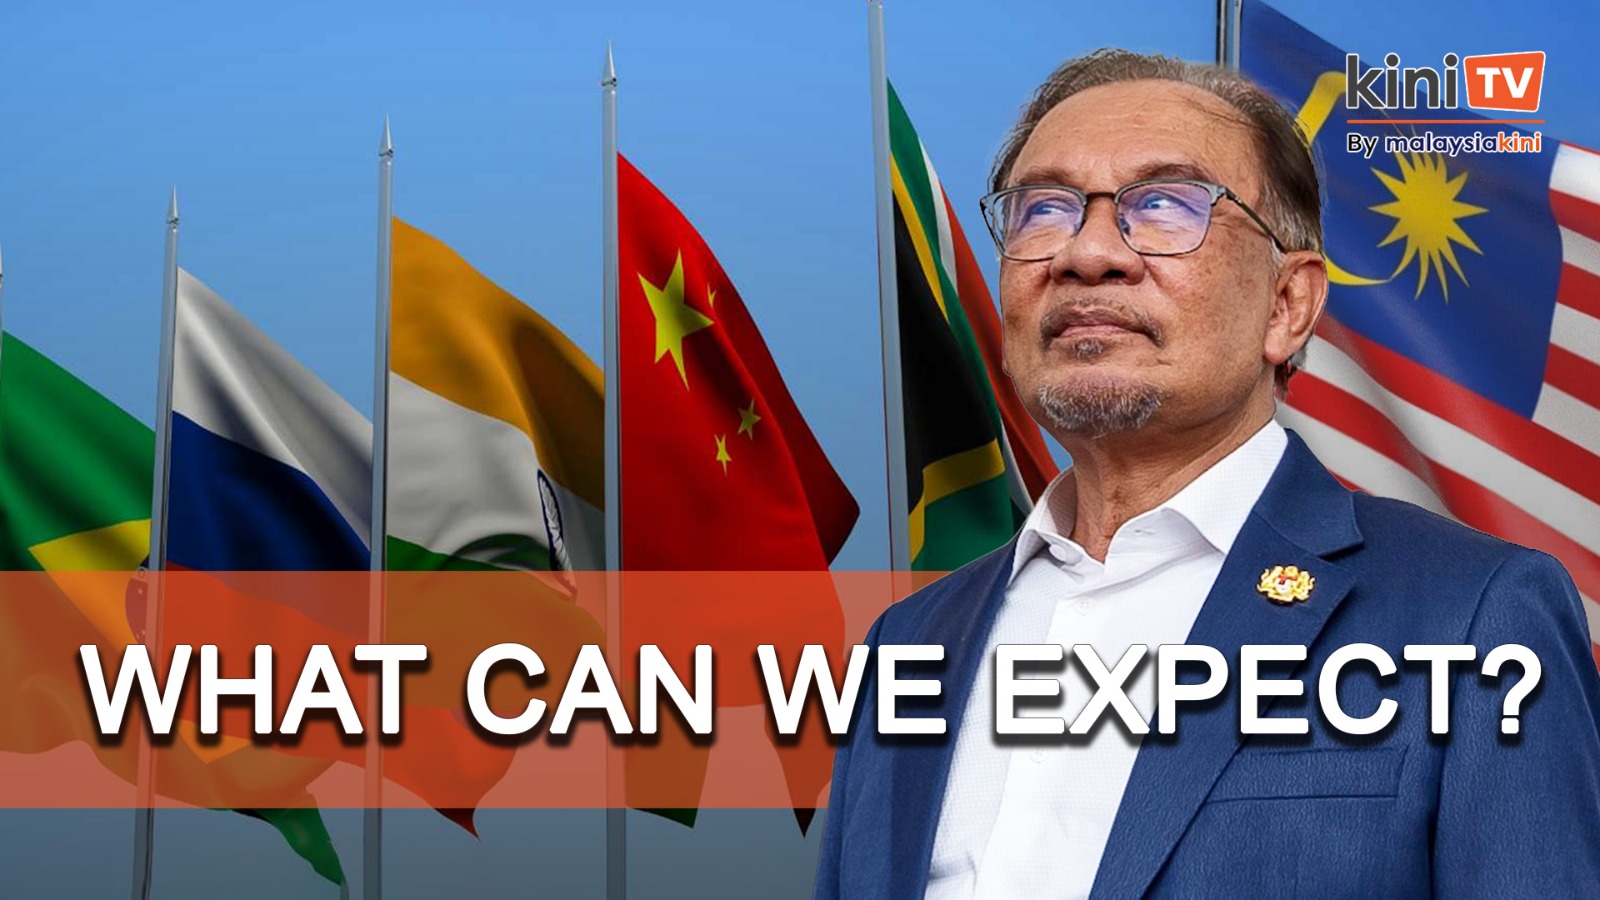 [Special Report] Malaysia's bid for BRICS - bold move or risky gamble?